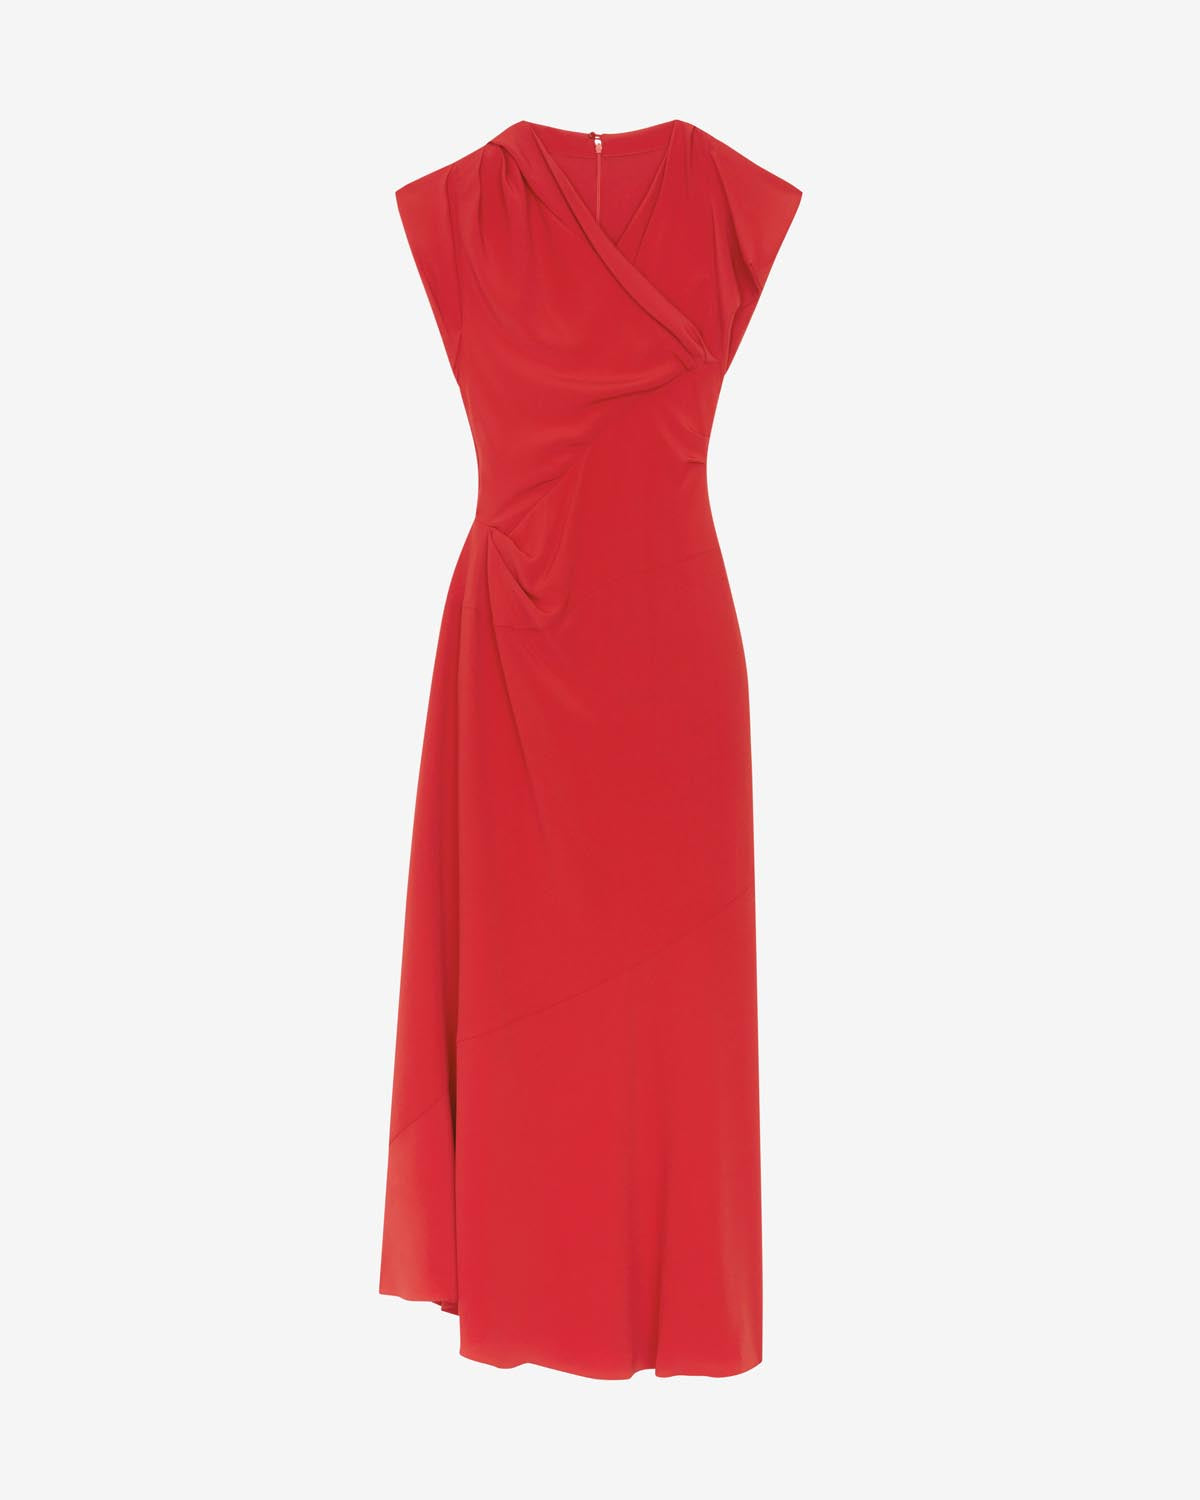 Kidena dress Woman Scarlet red 1